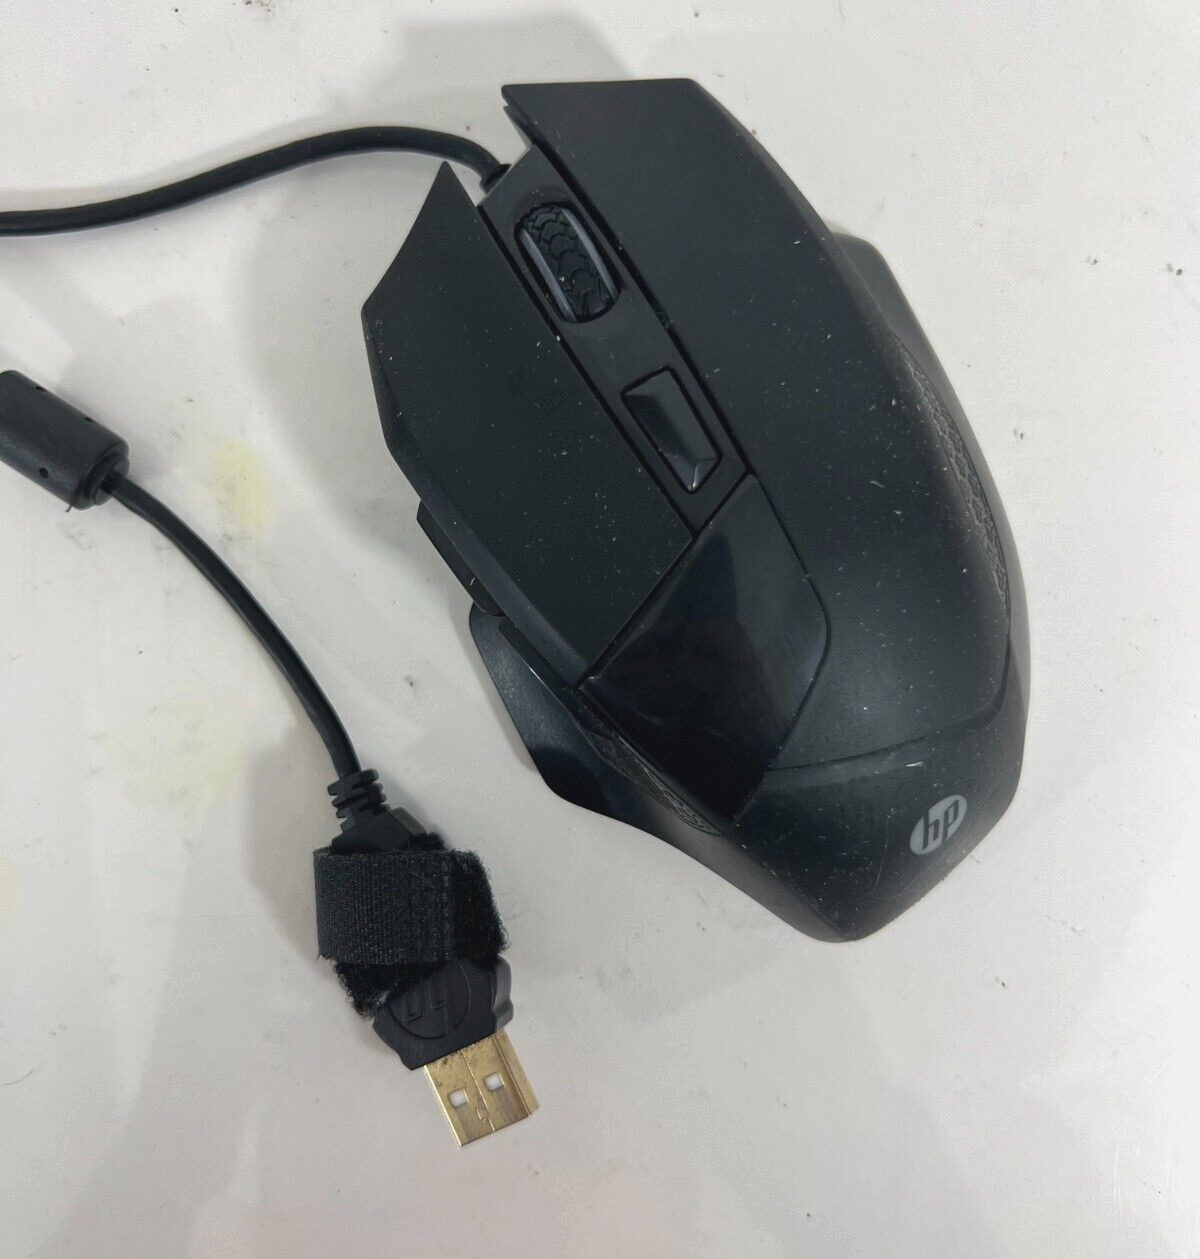 HP Optical Gaming Mouse G200 P3327 Sensor 6200 Dpi 6 Buttons Black